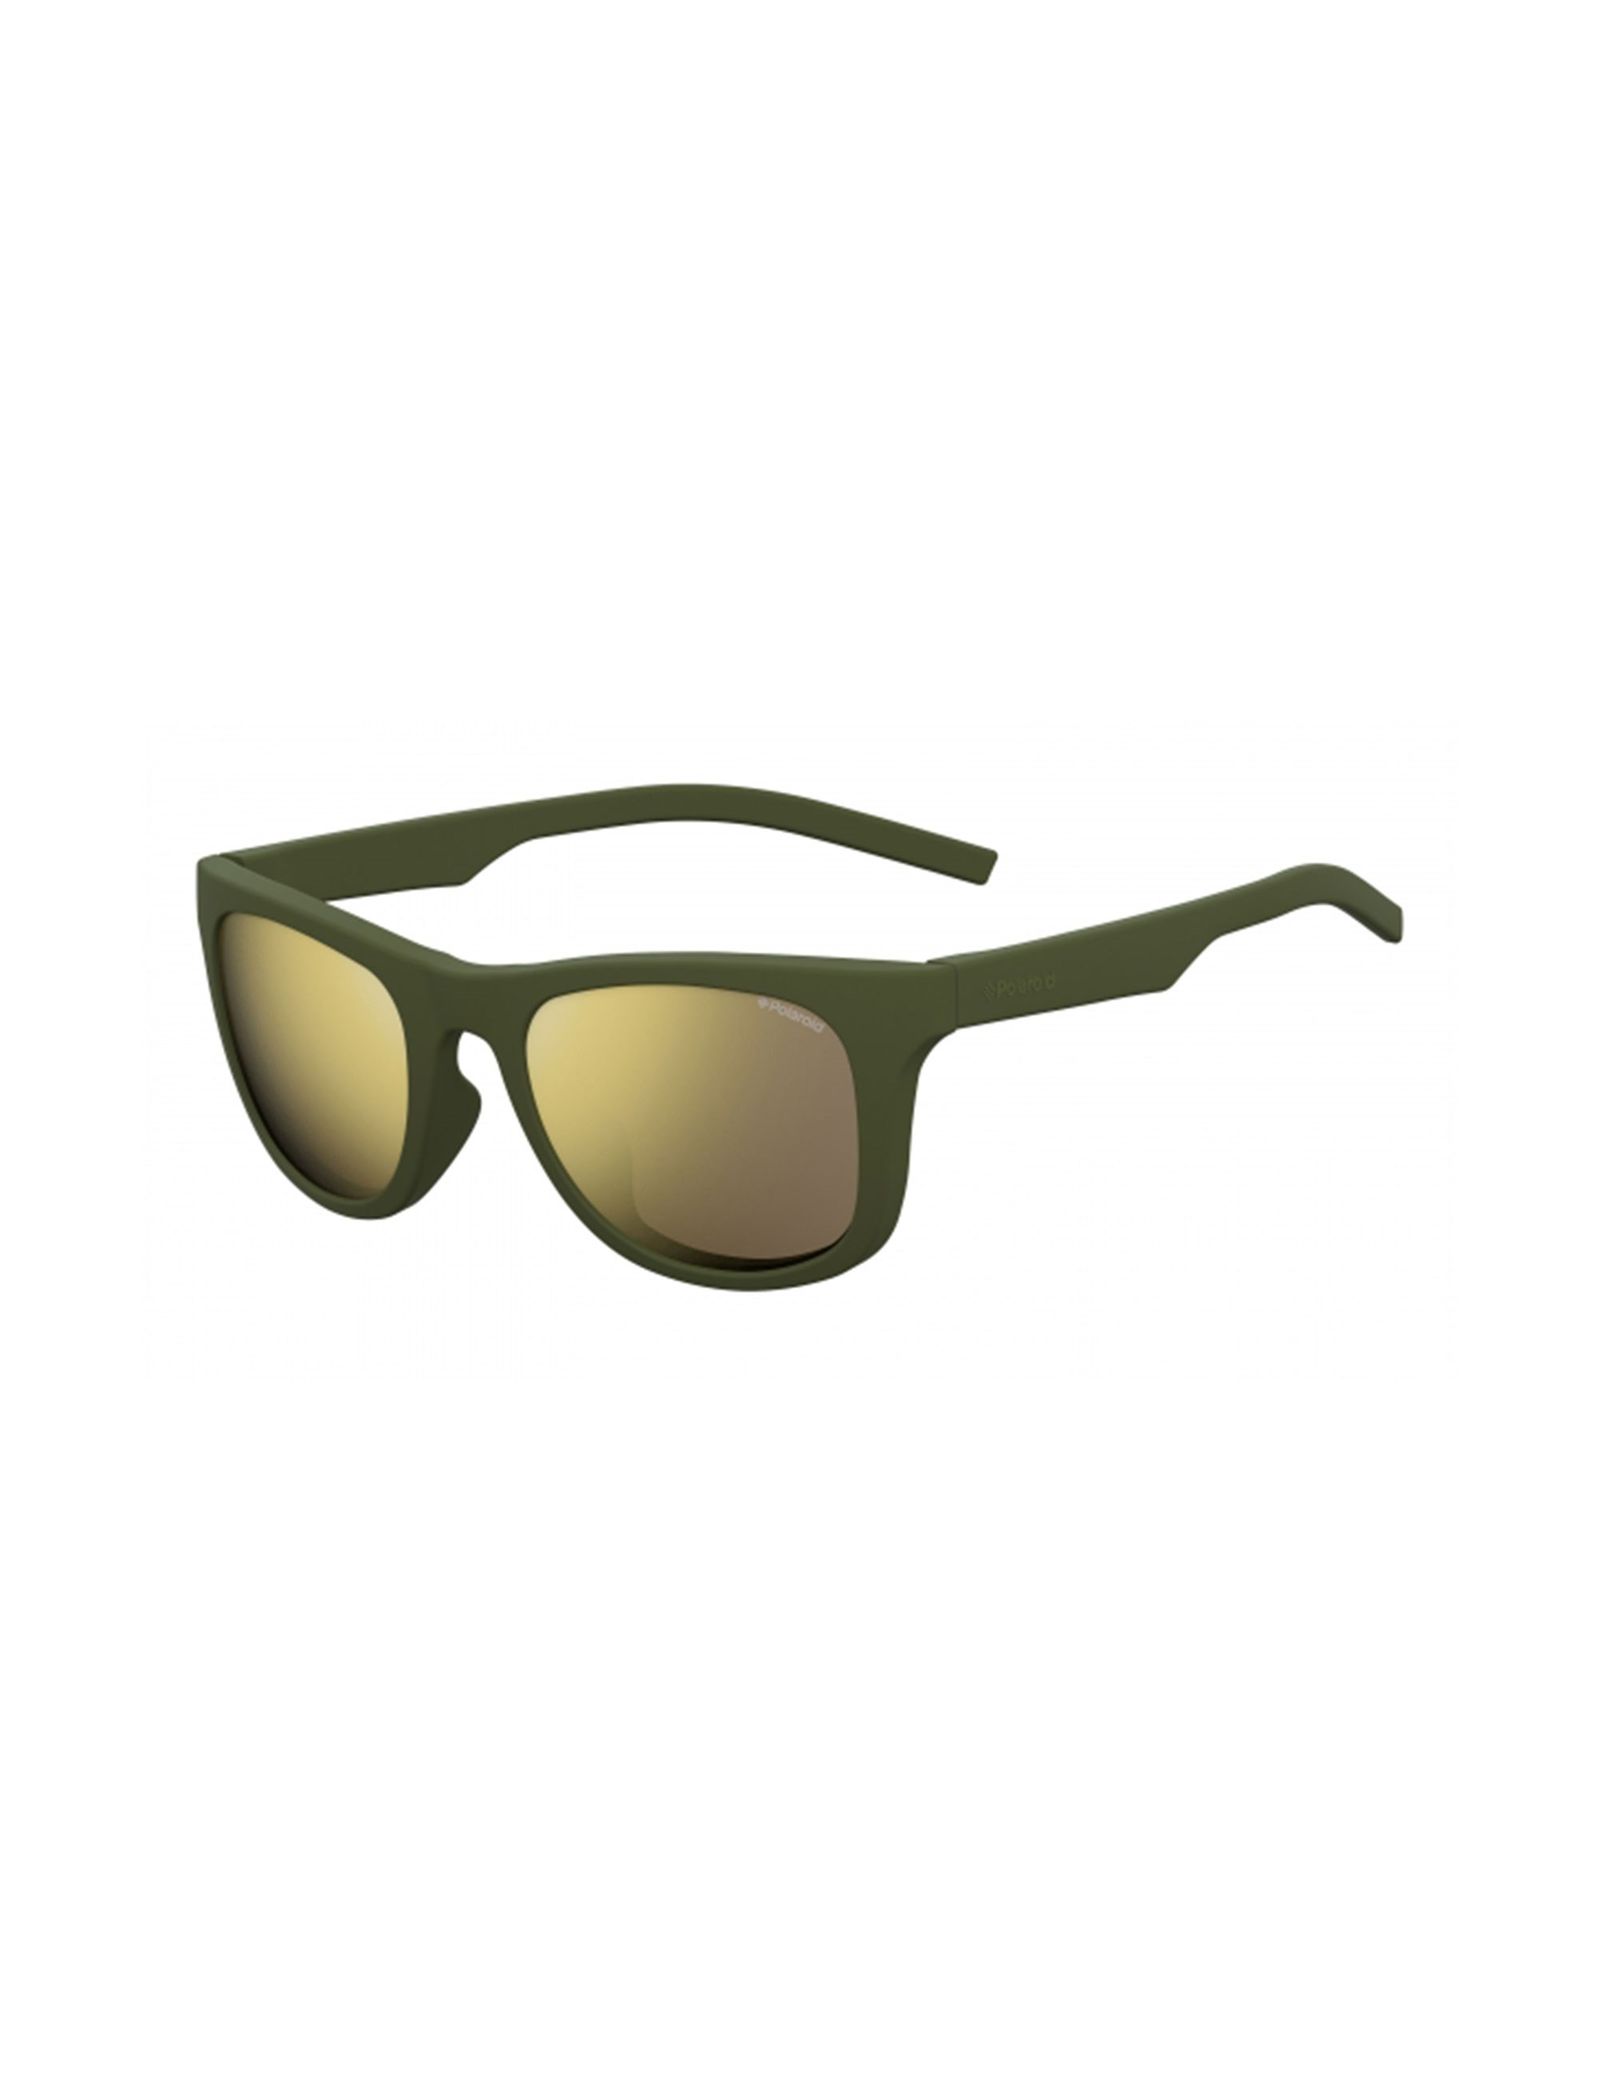 عینک آفتابی مستطیلی بزرگسال - پولاروید - سبز - 3